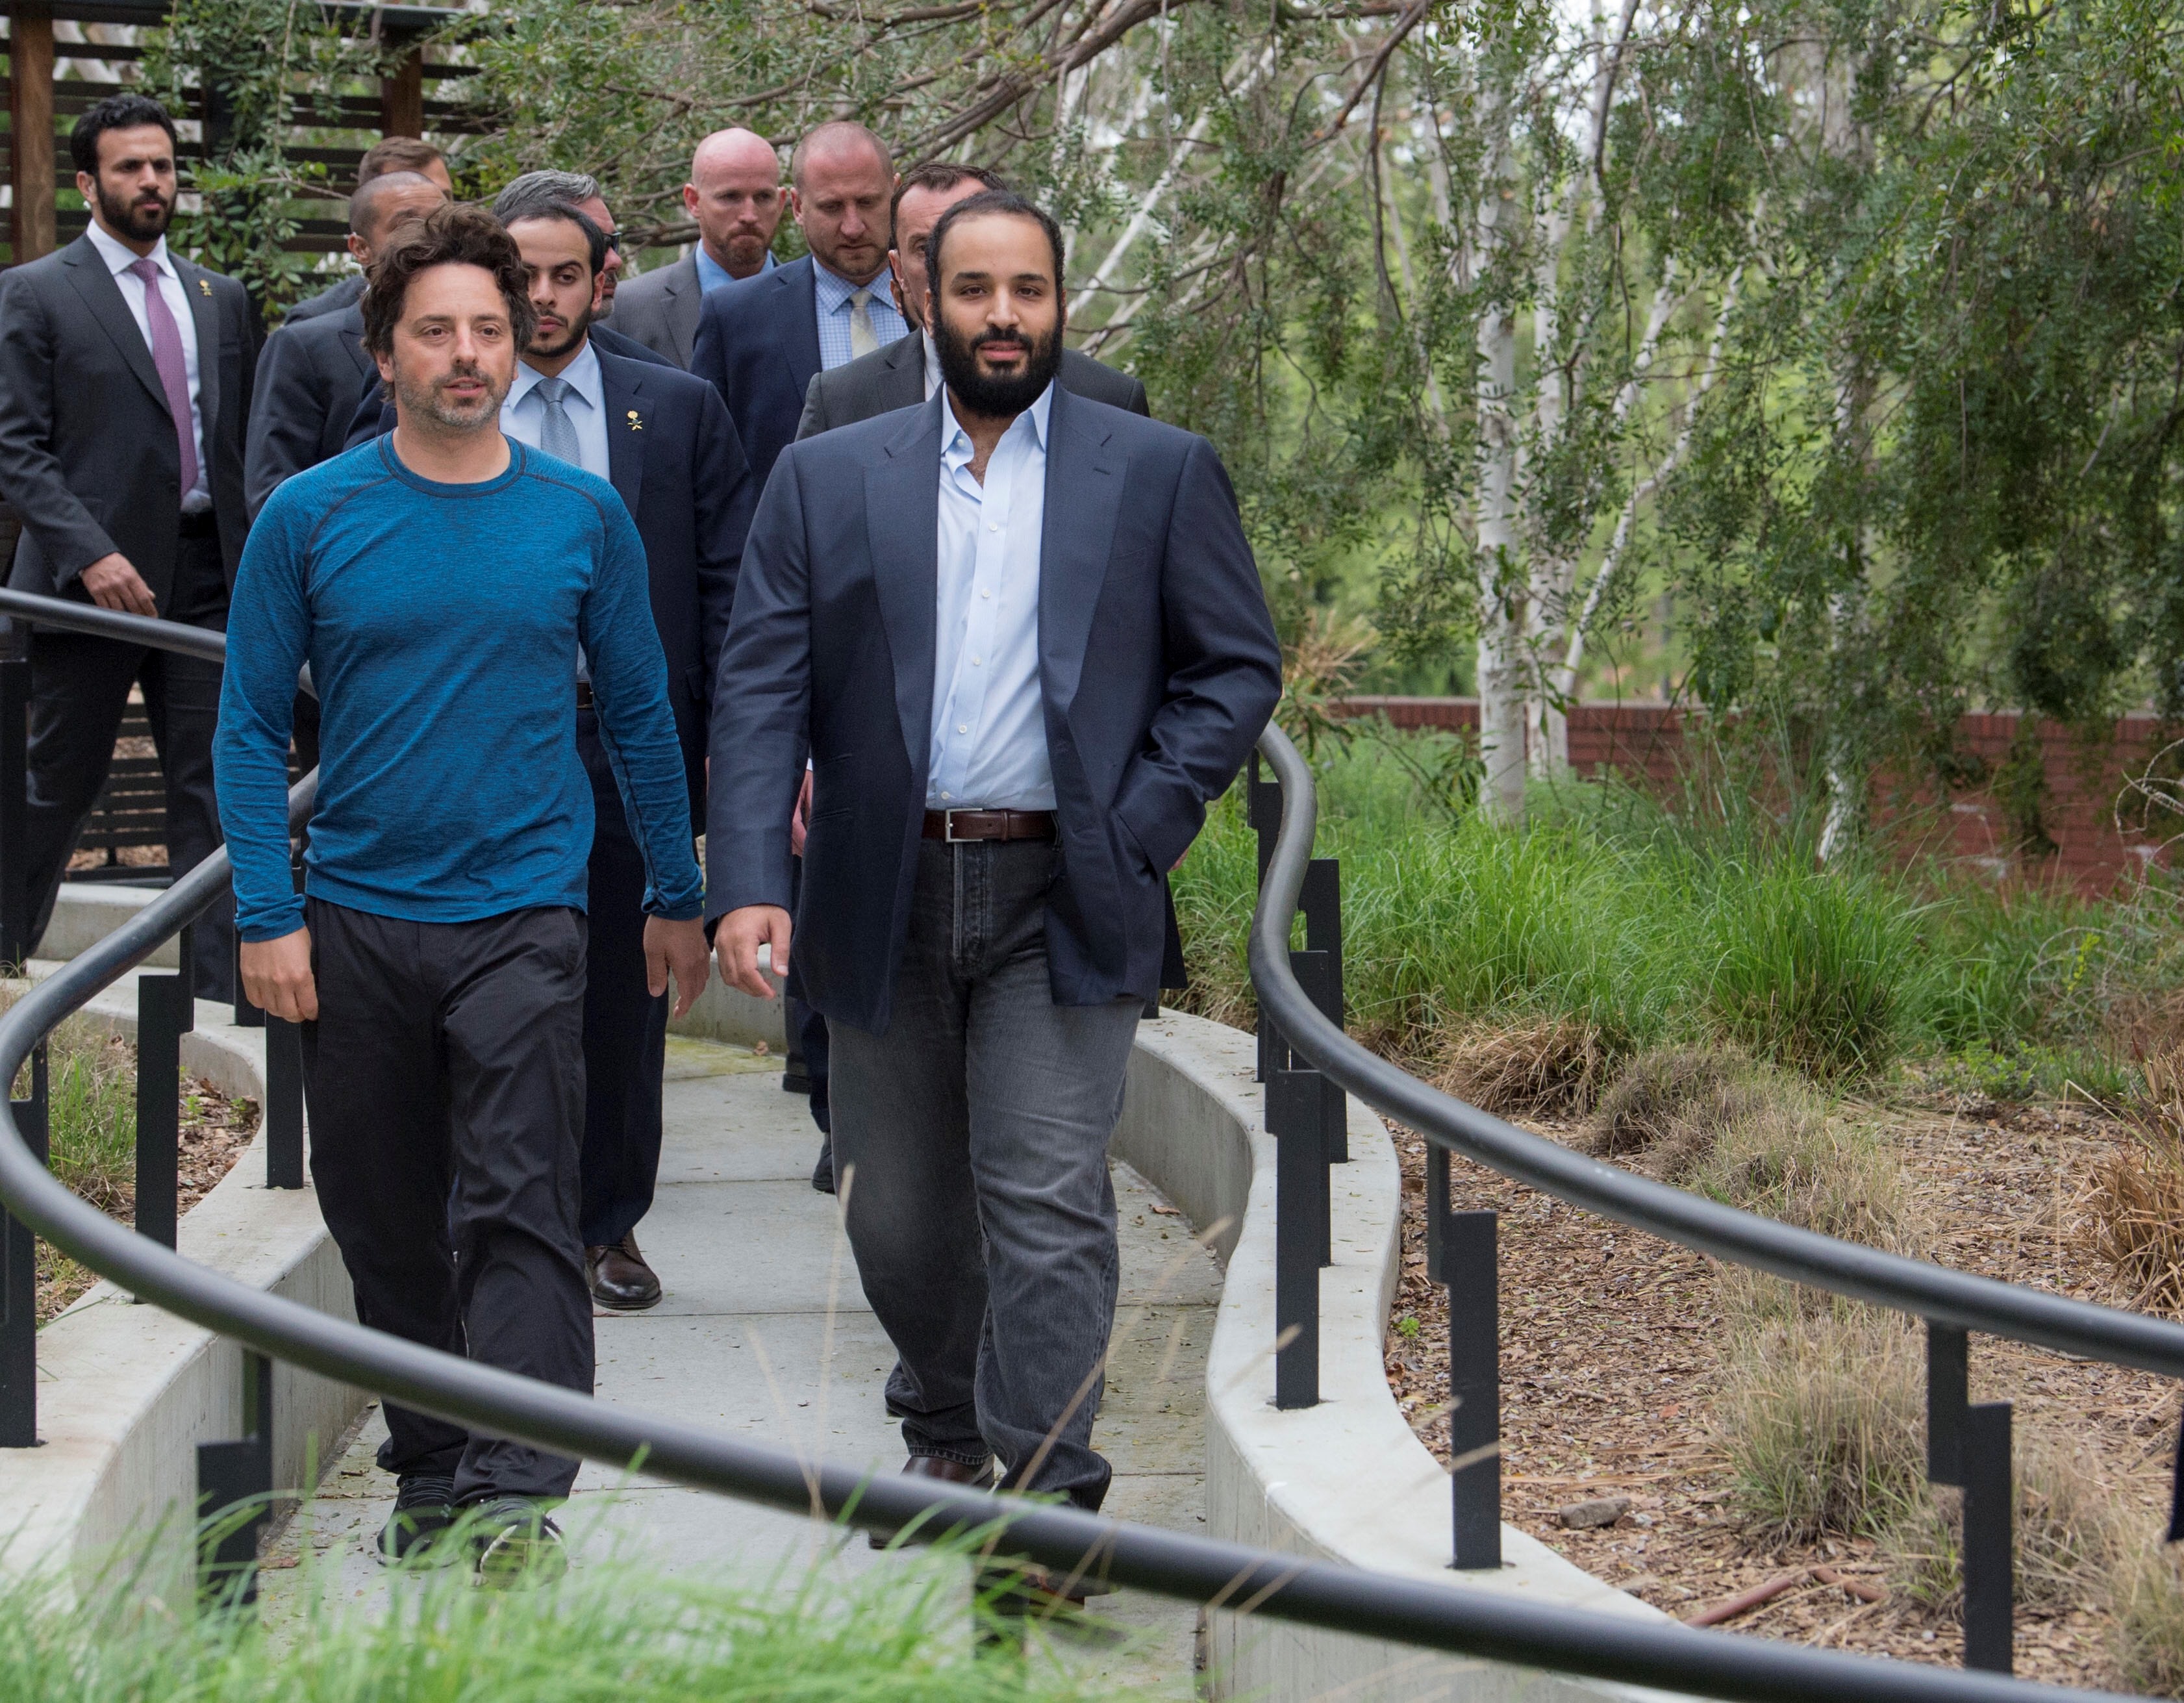 Crown Prince of Saudi Arabia Mohammed bin Salman Al Saud walking on the Google campus with Google co-founder Sergey Brin